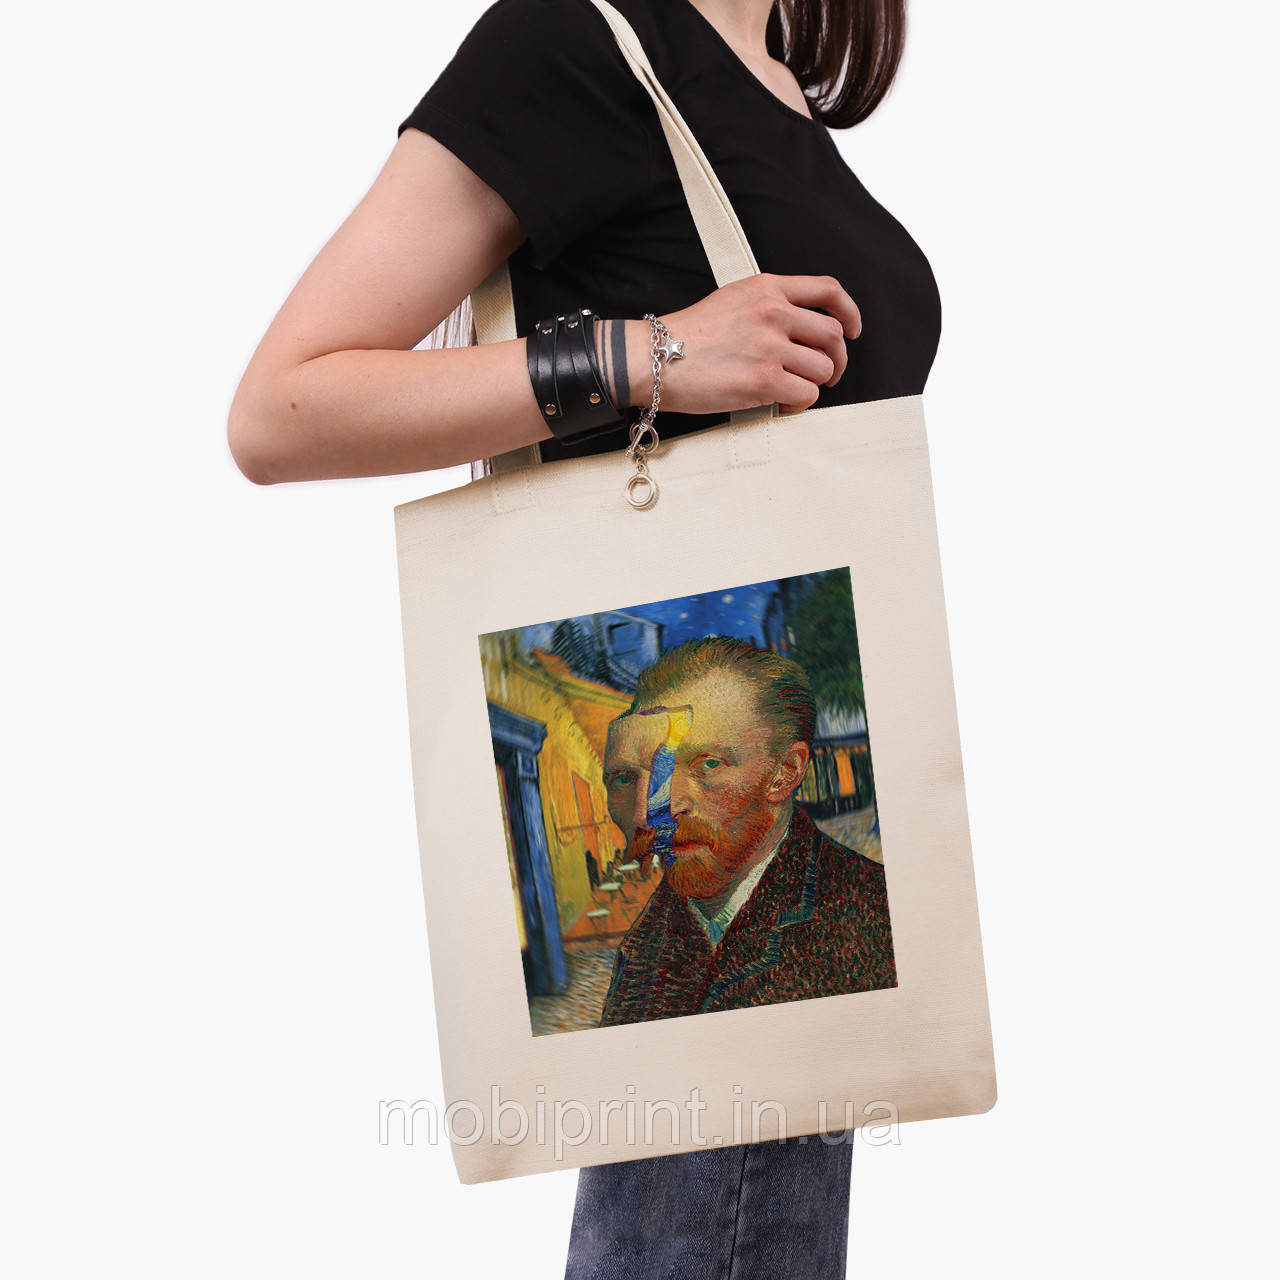 Еко сумка Вінсент Ван Гог (Vincent van Gogh) (9227-2968-BG) бежева класік саржа